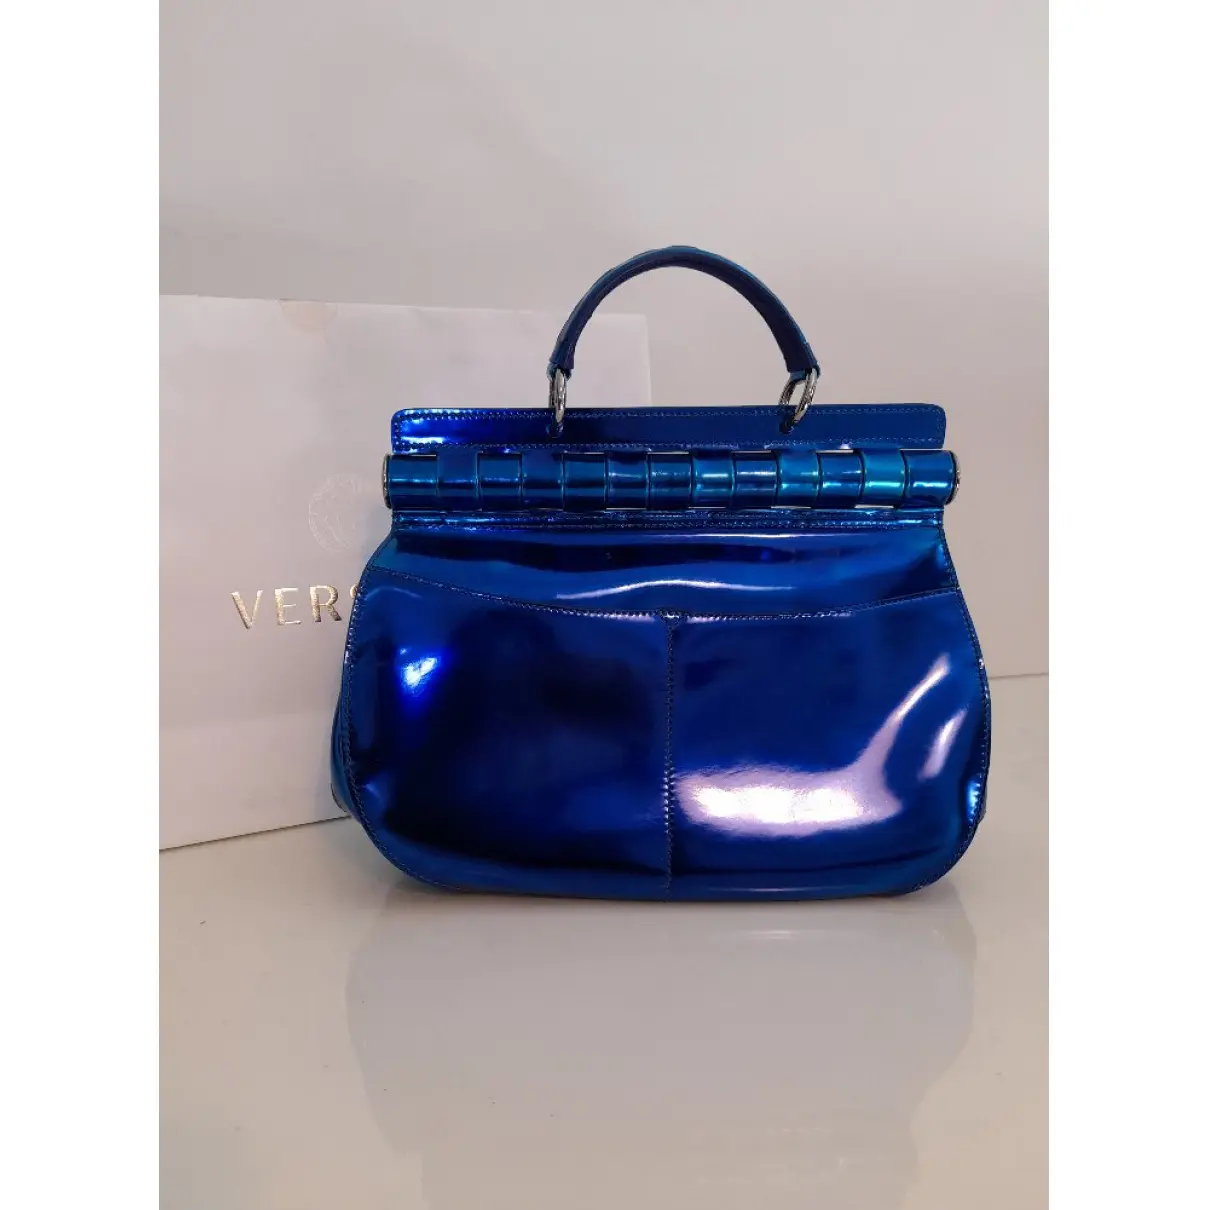 Patent leather handbag Versace